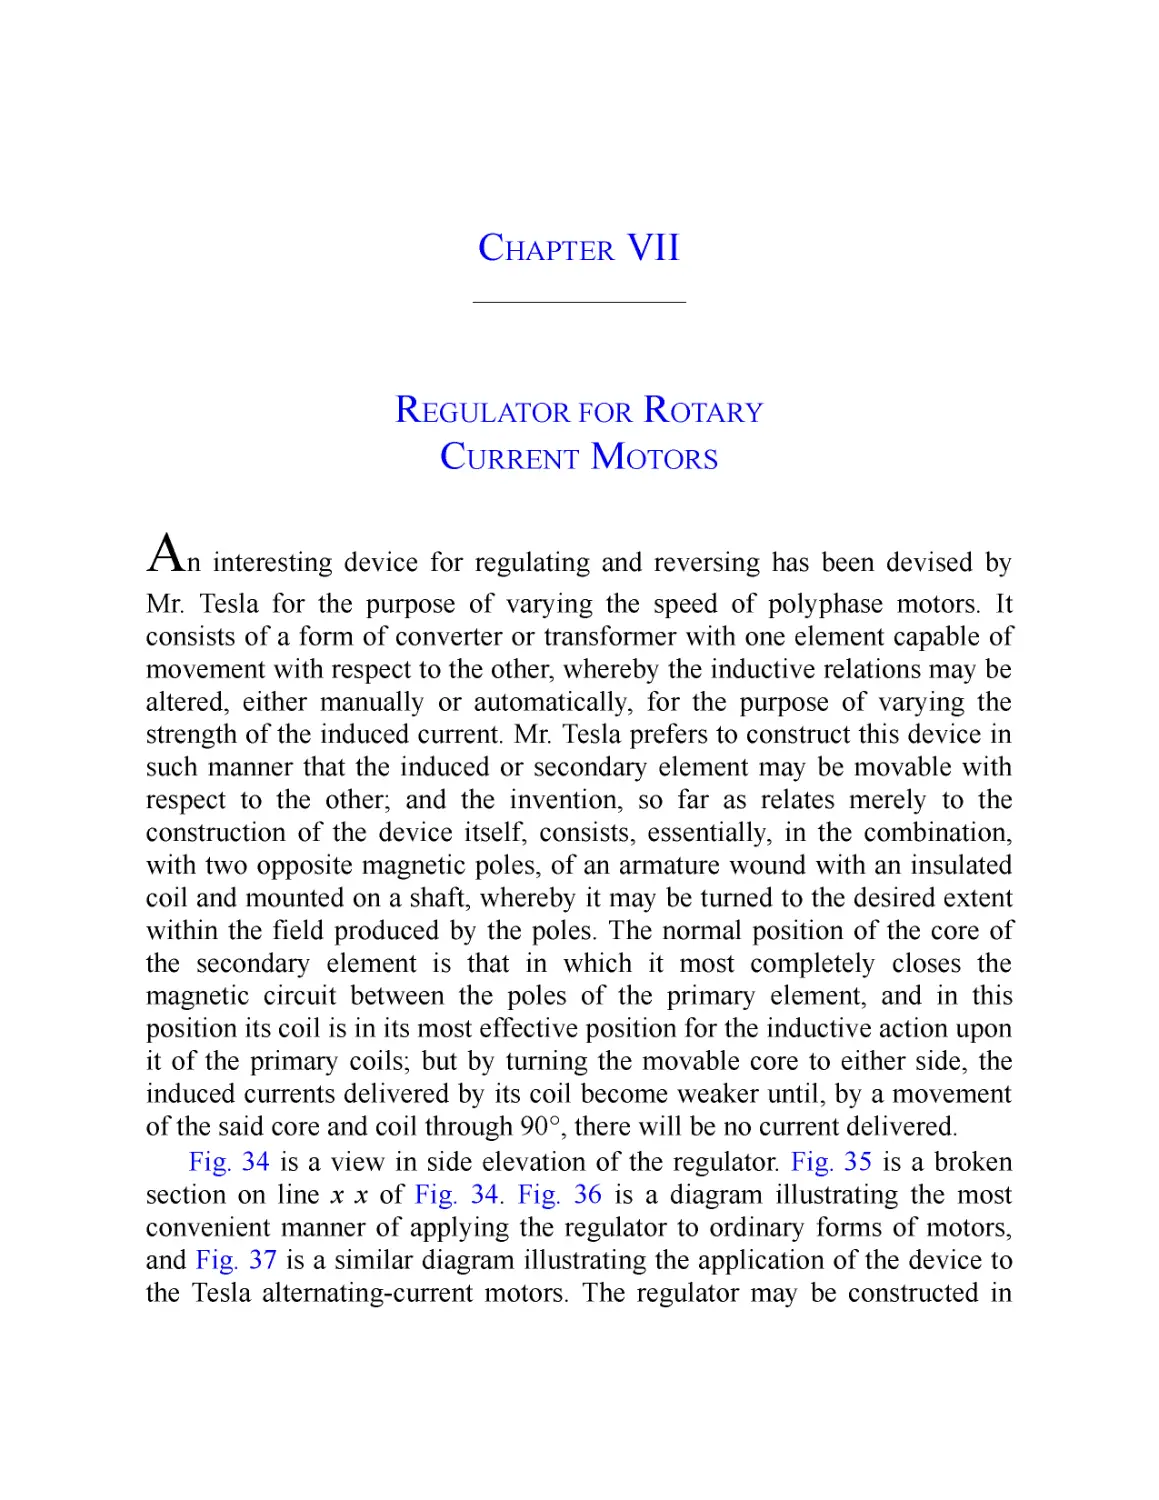 ﻿Chapter VII: Regulator for Rotary Current Motor